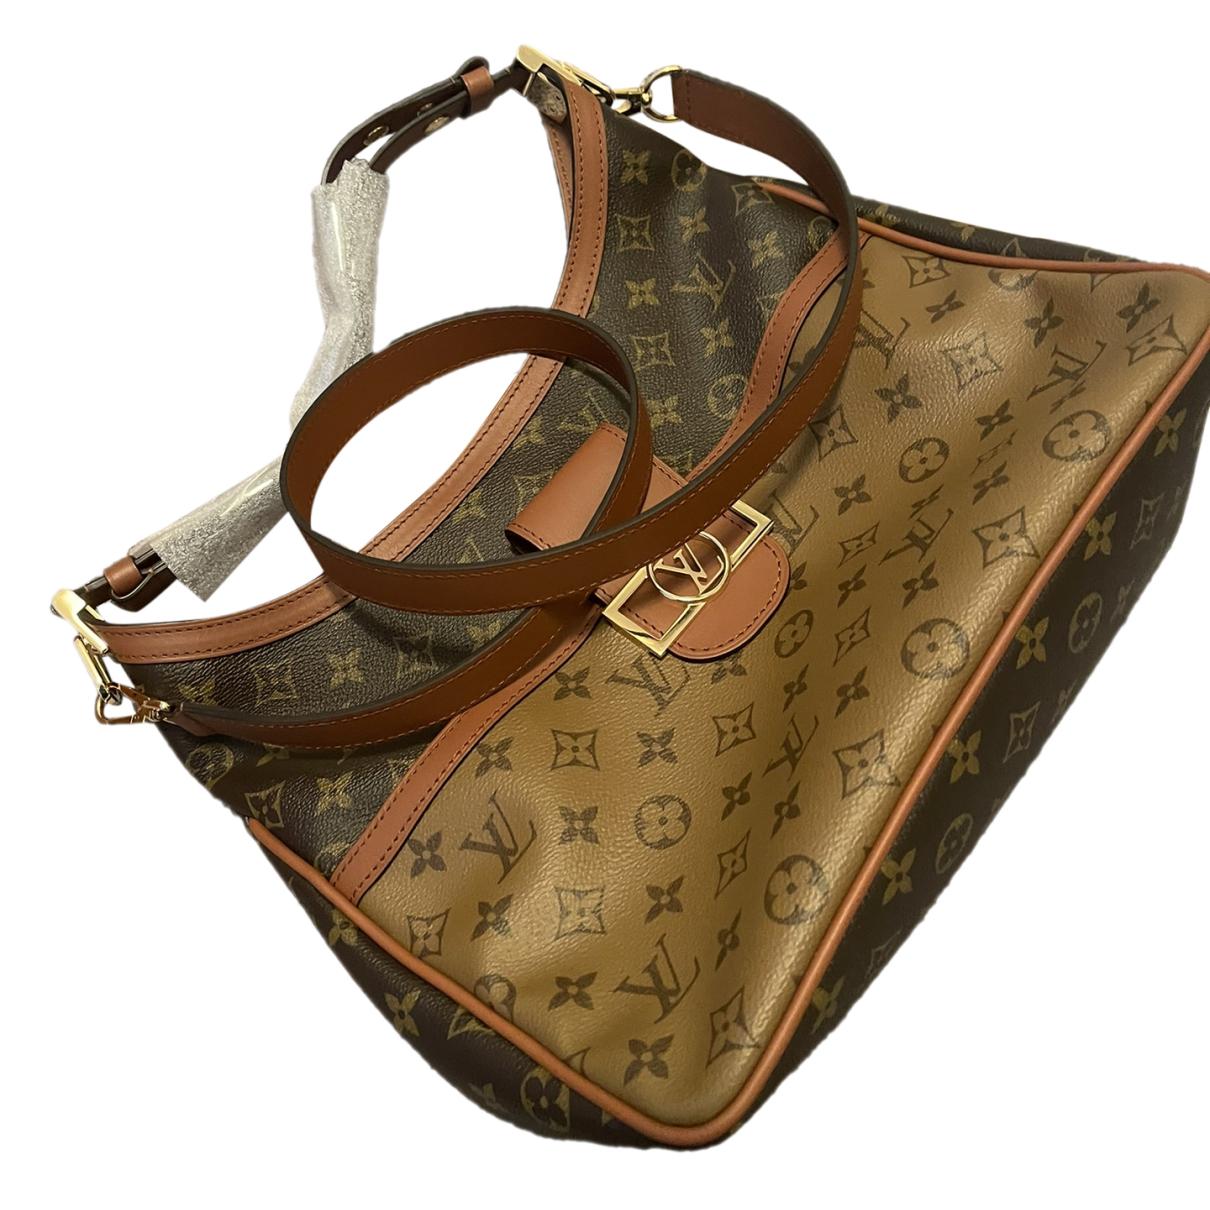 Dauphine Hobo Louis Vuitton Handbags for Women - Vestiaire Collective